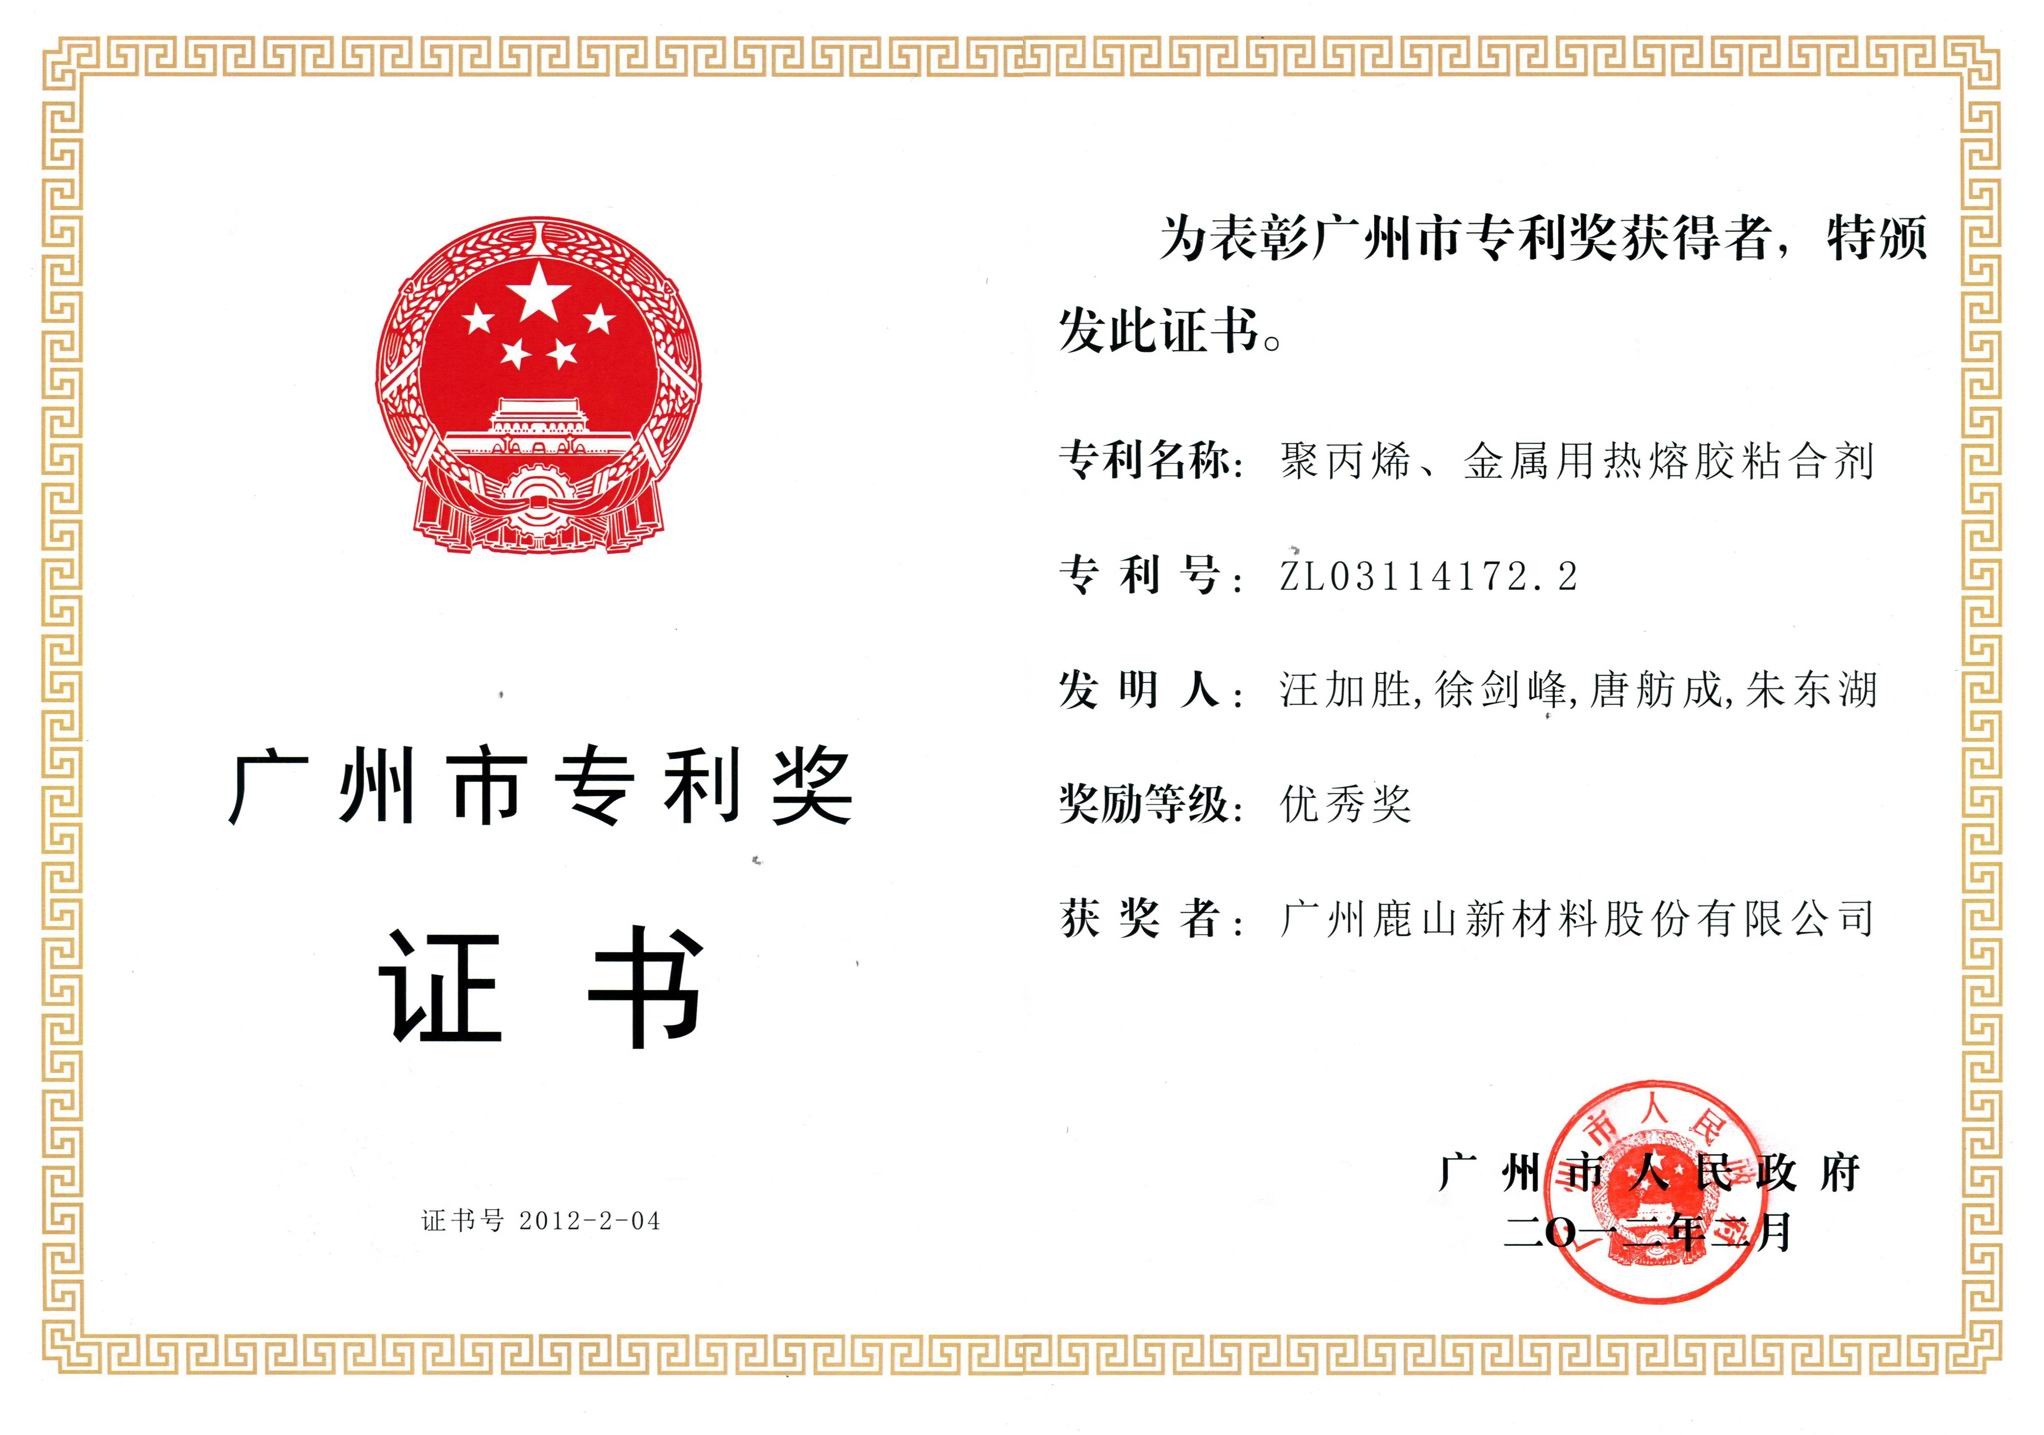 Guangdong patent award certificate